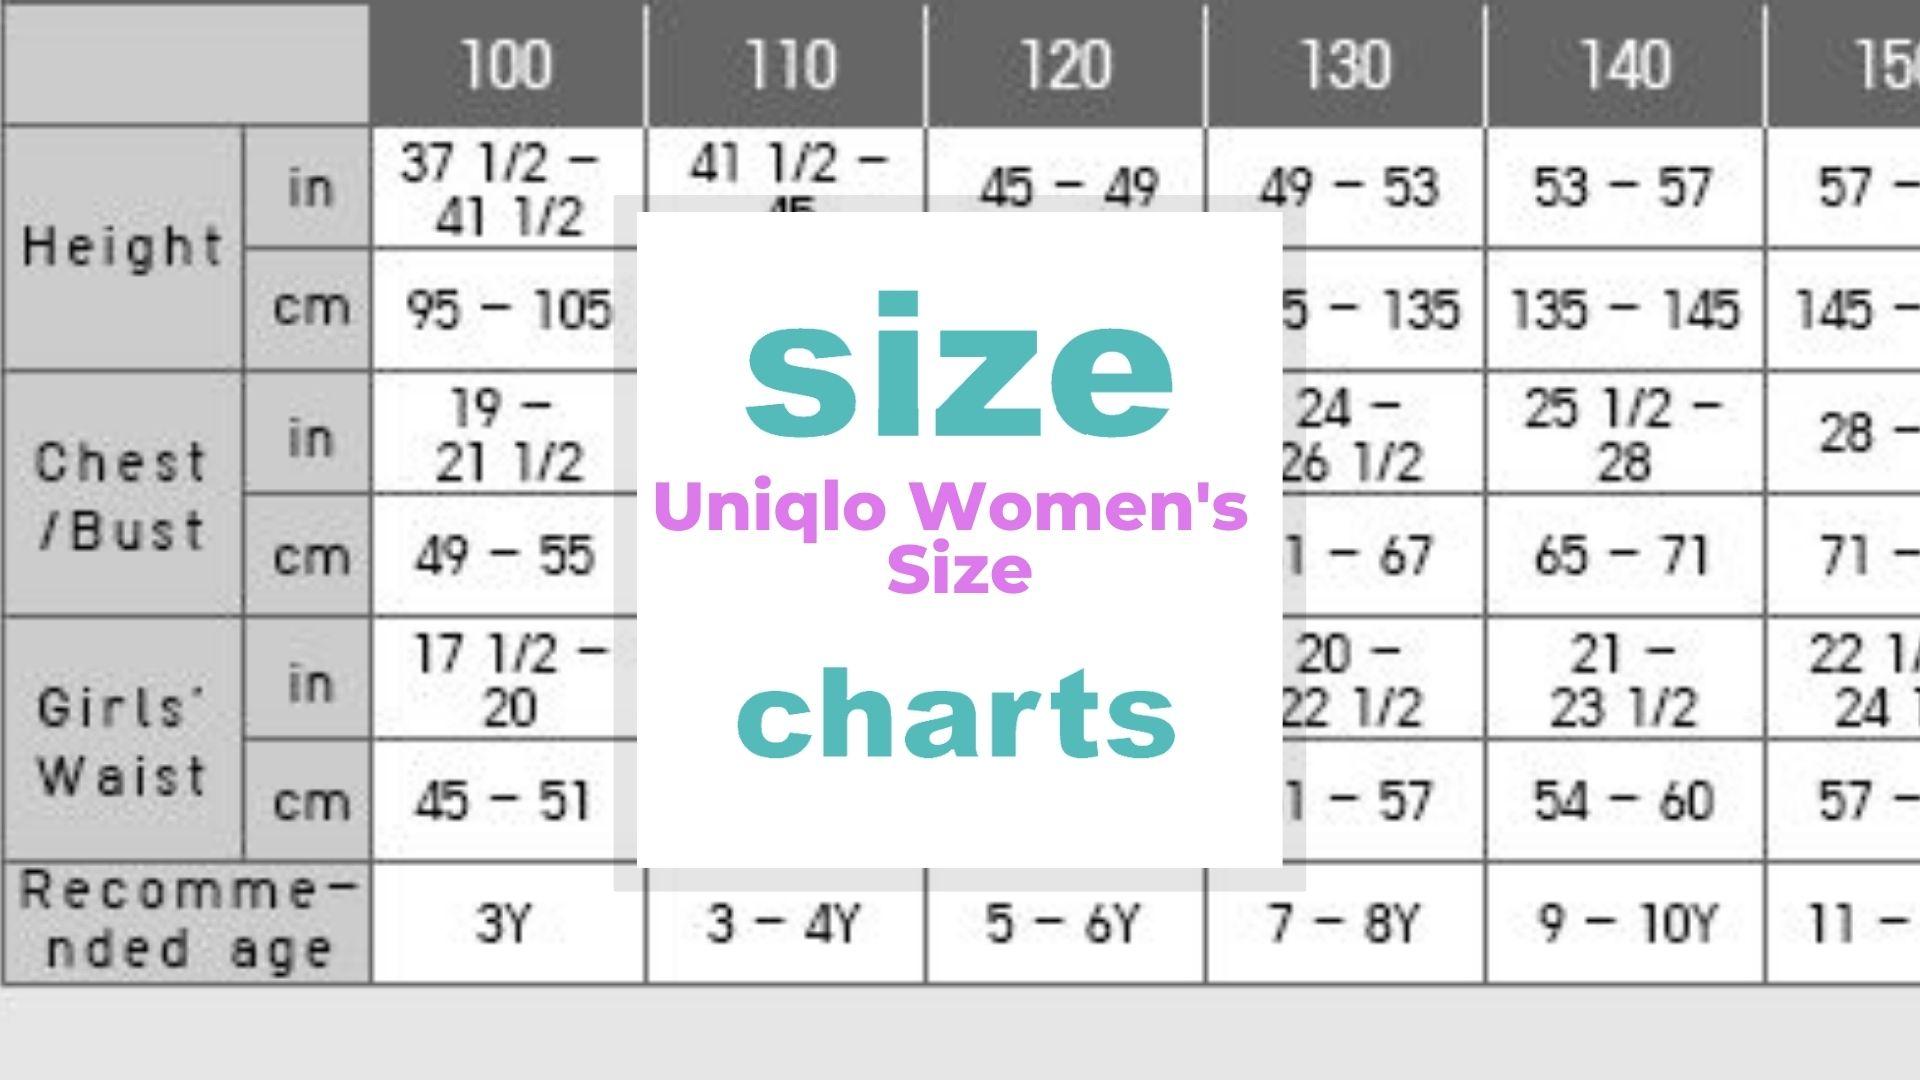 Uniqlo Women's Size Charts - Size-Charts.com - When size matters